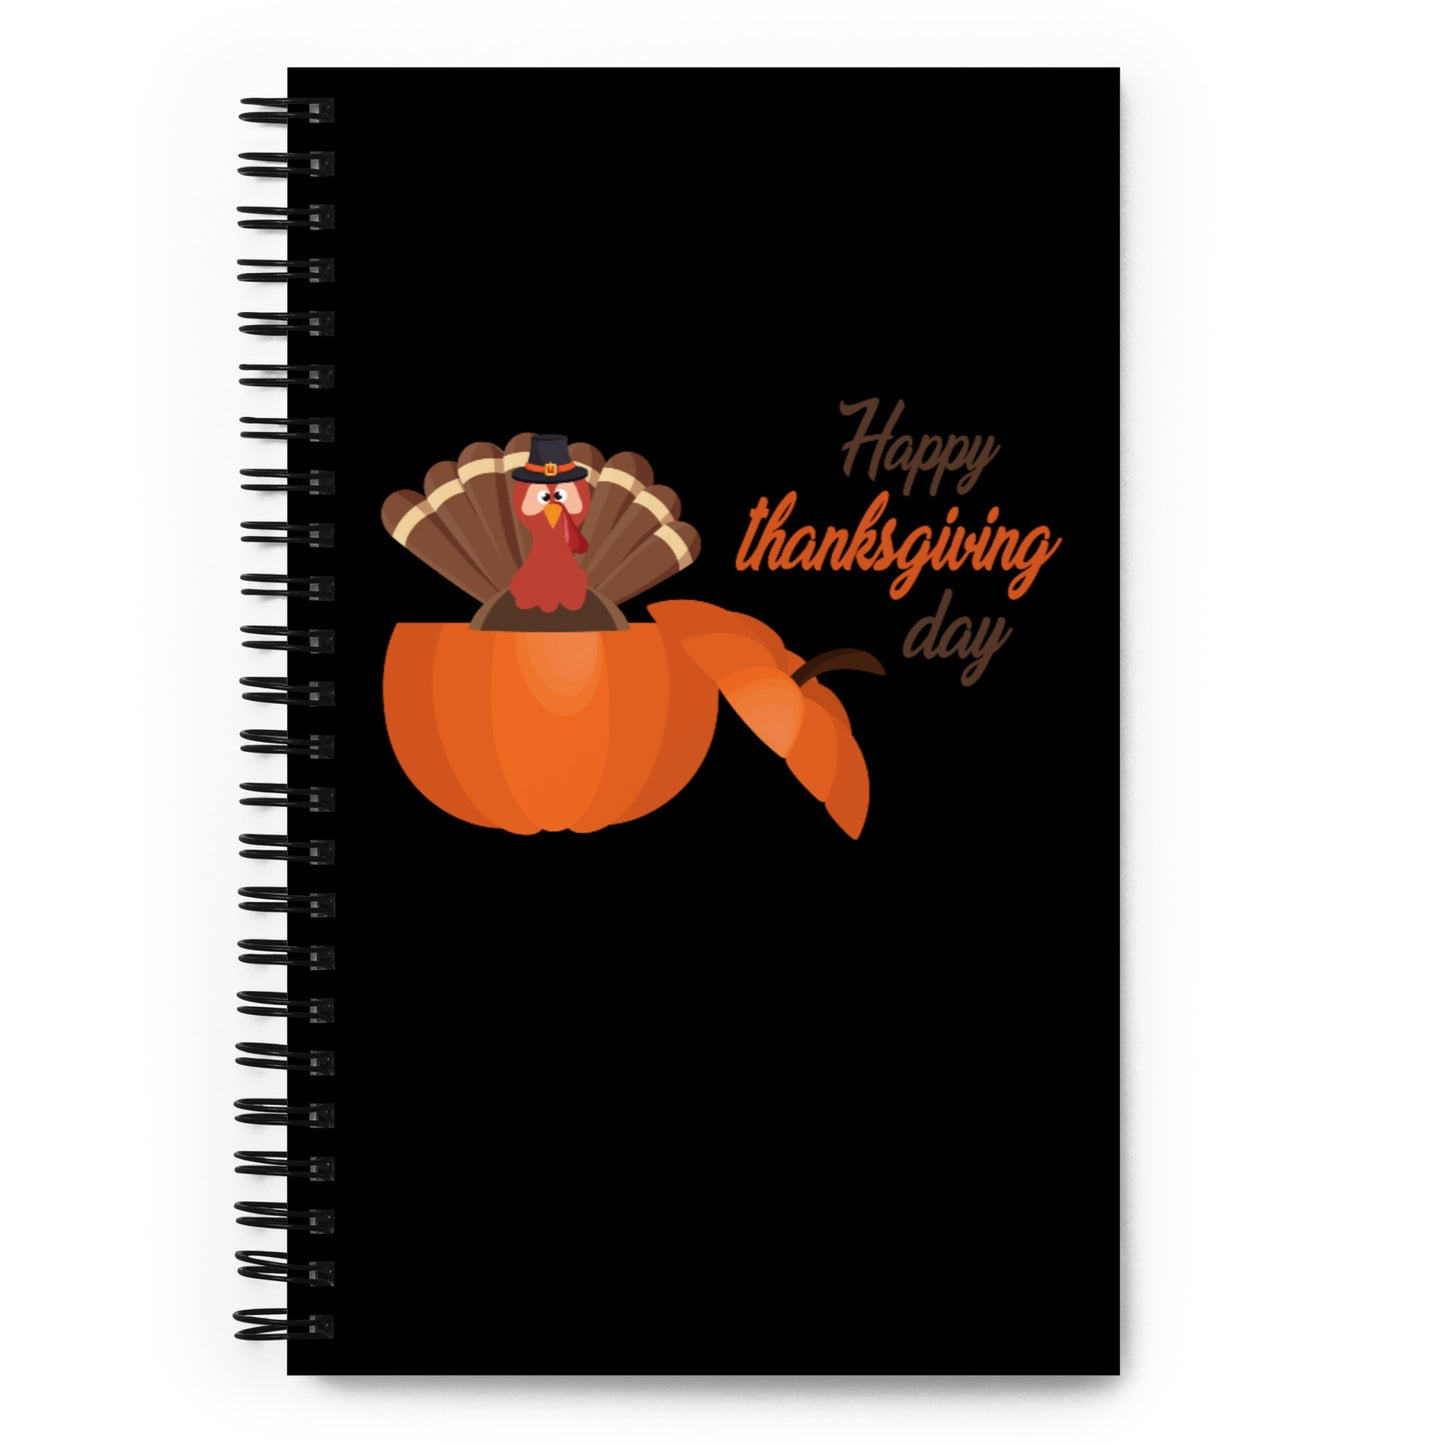 Happy Thanksgiving Day Spiral notebook